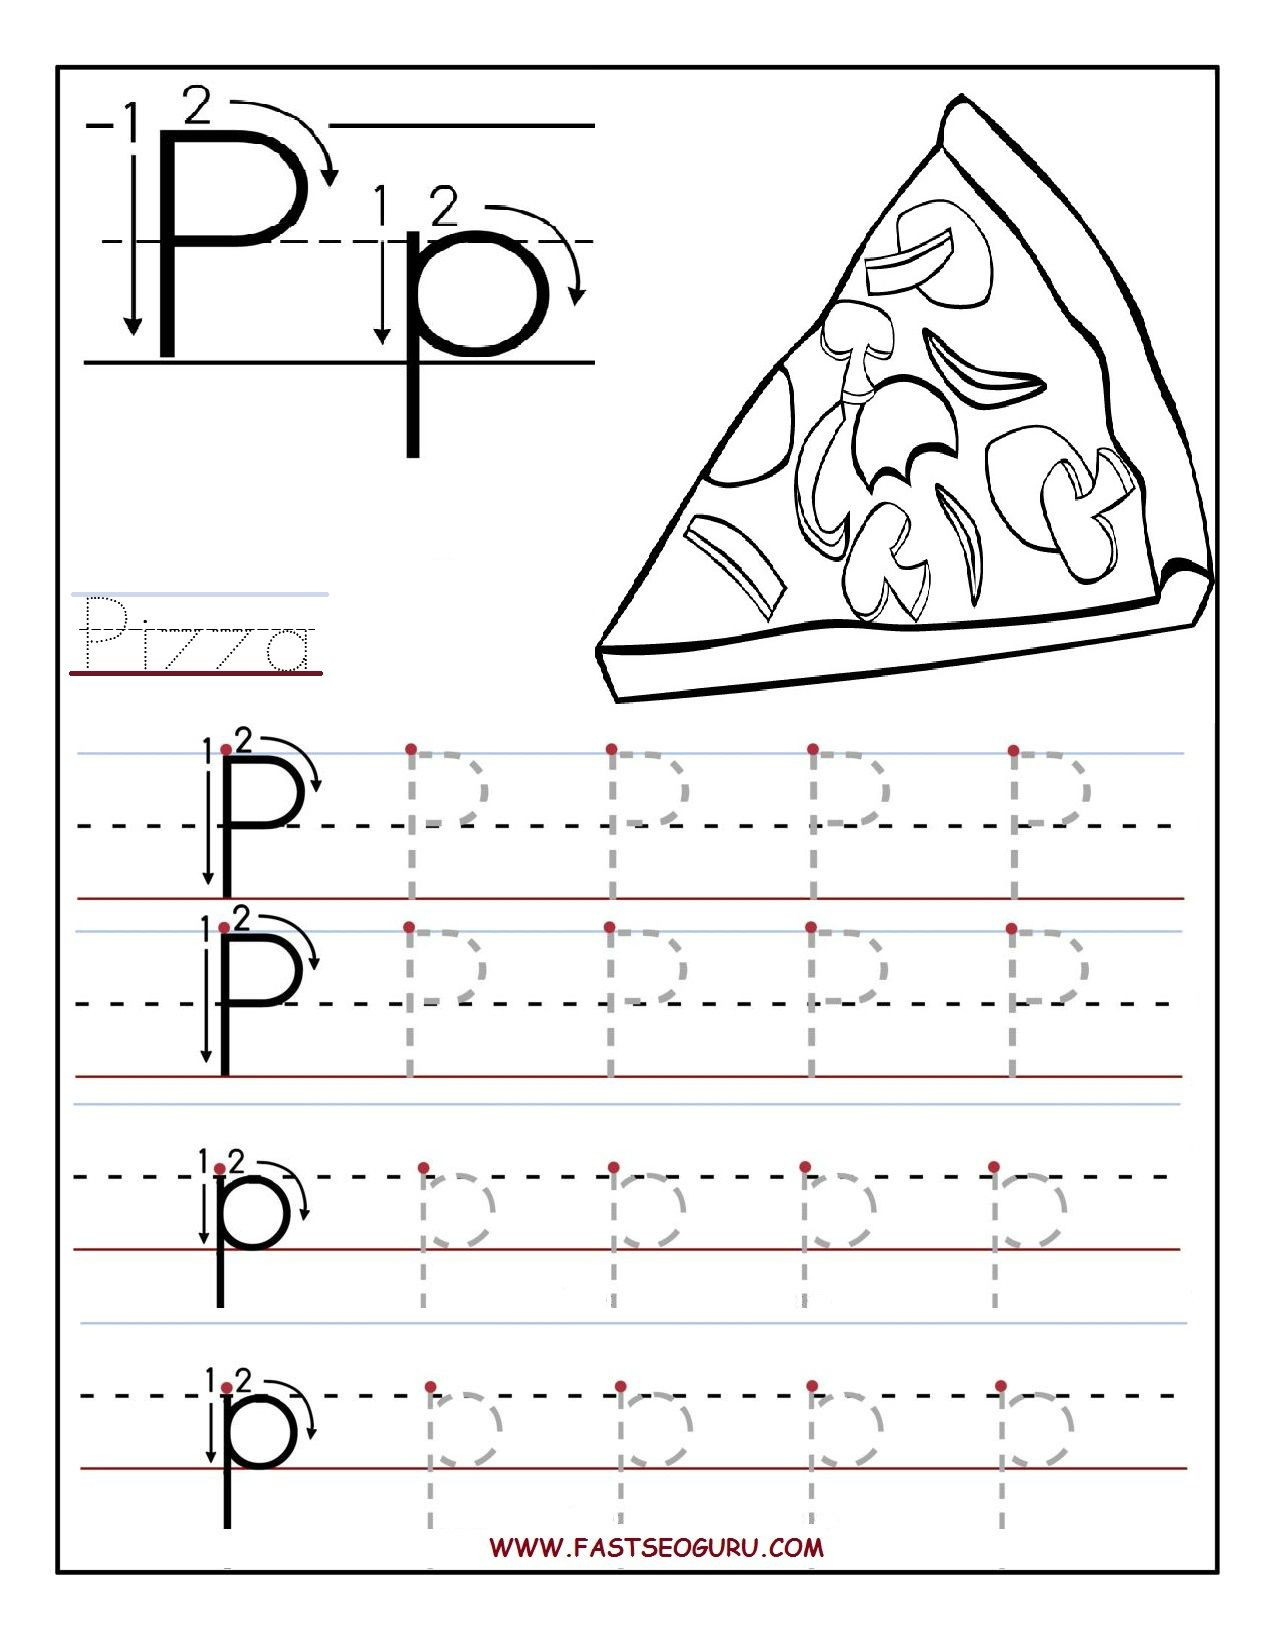 Free Printable Letter P Worksheets Printable Letter P Tracing Worksheets for Preschool